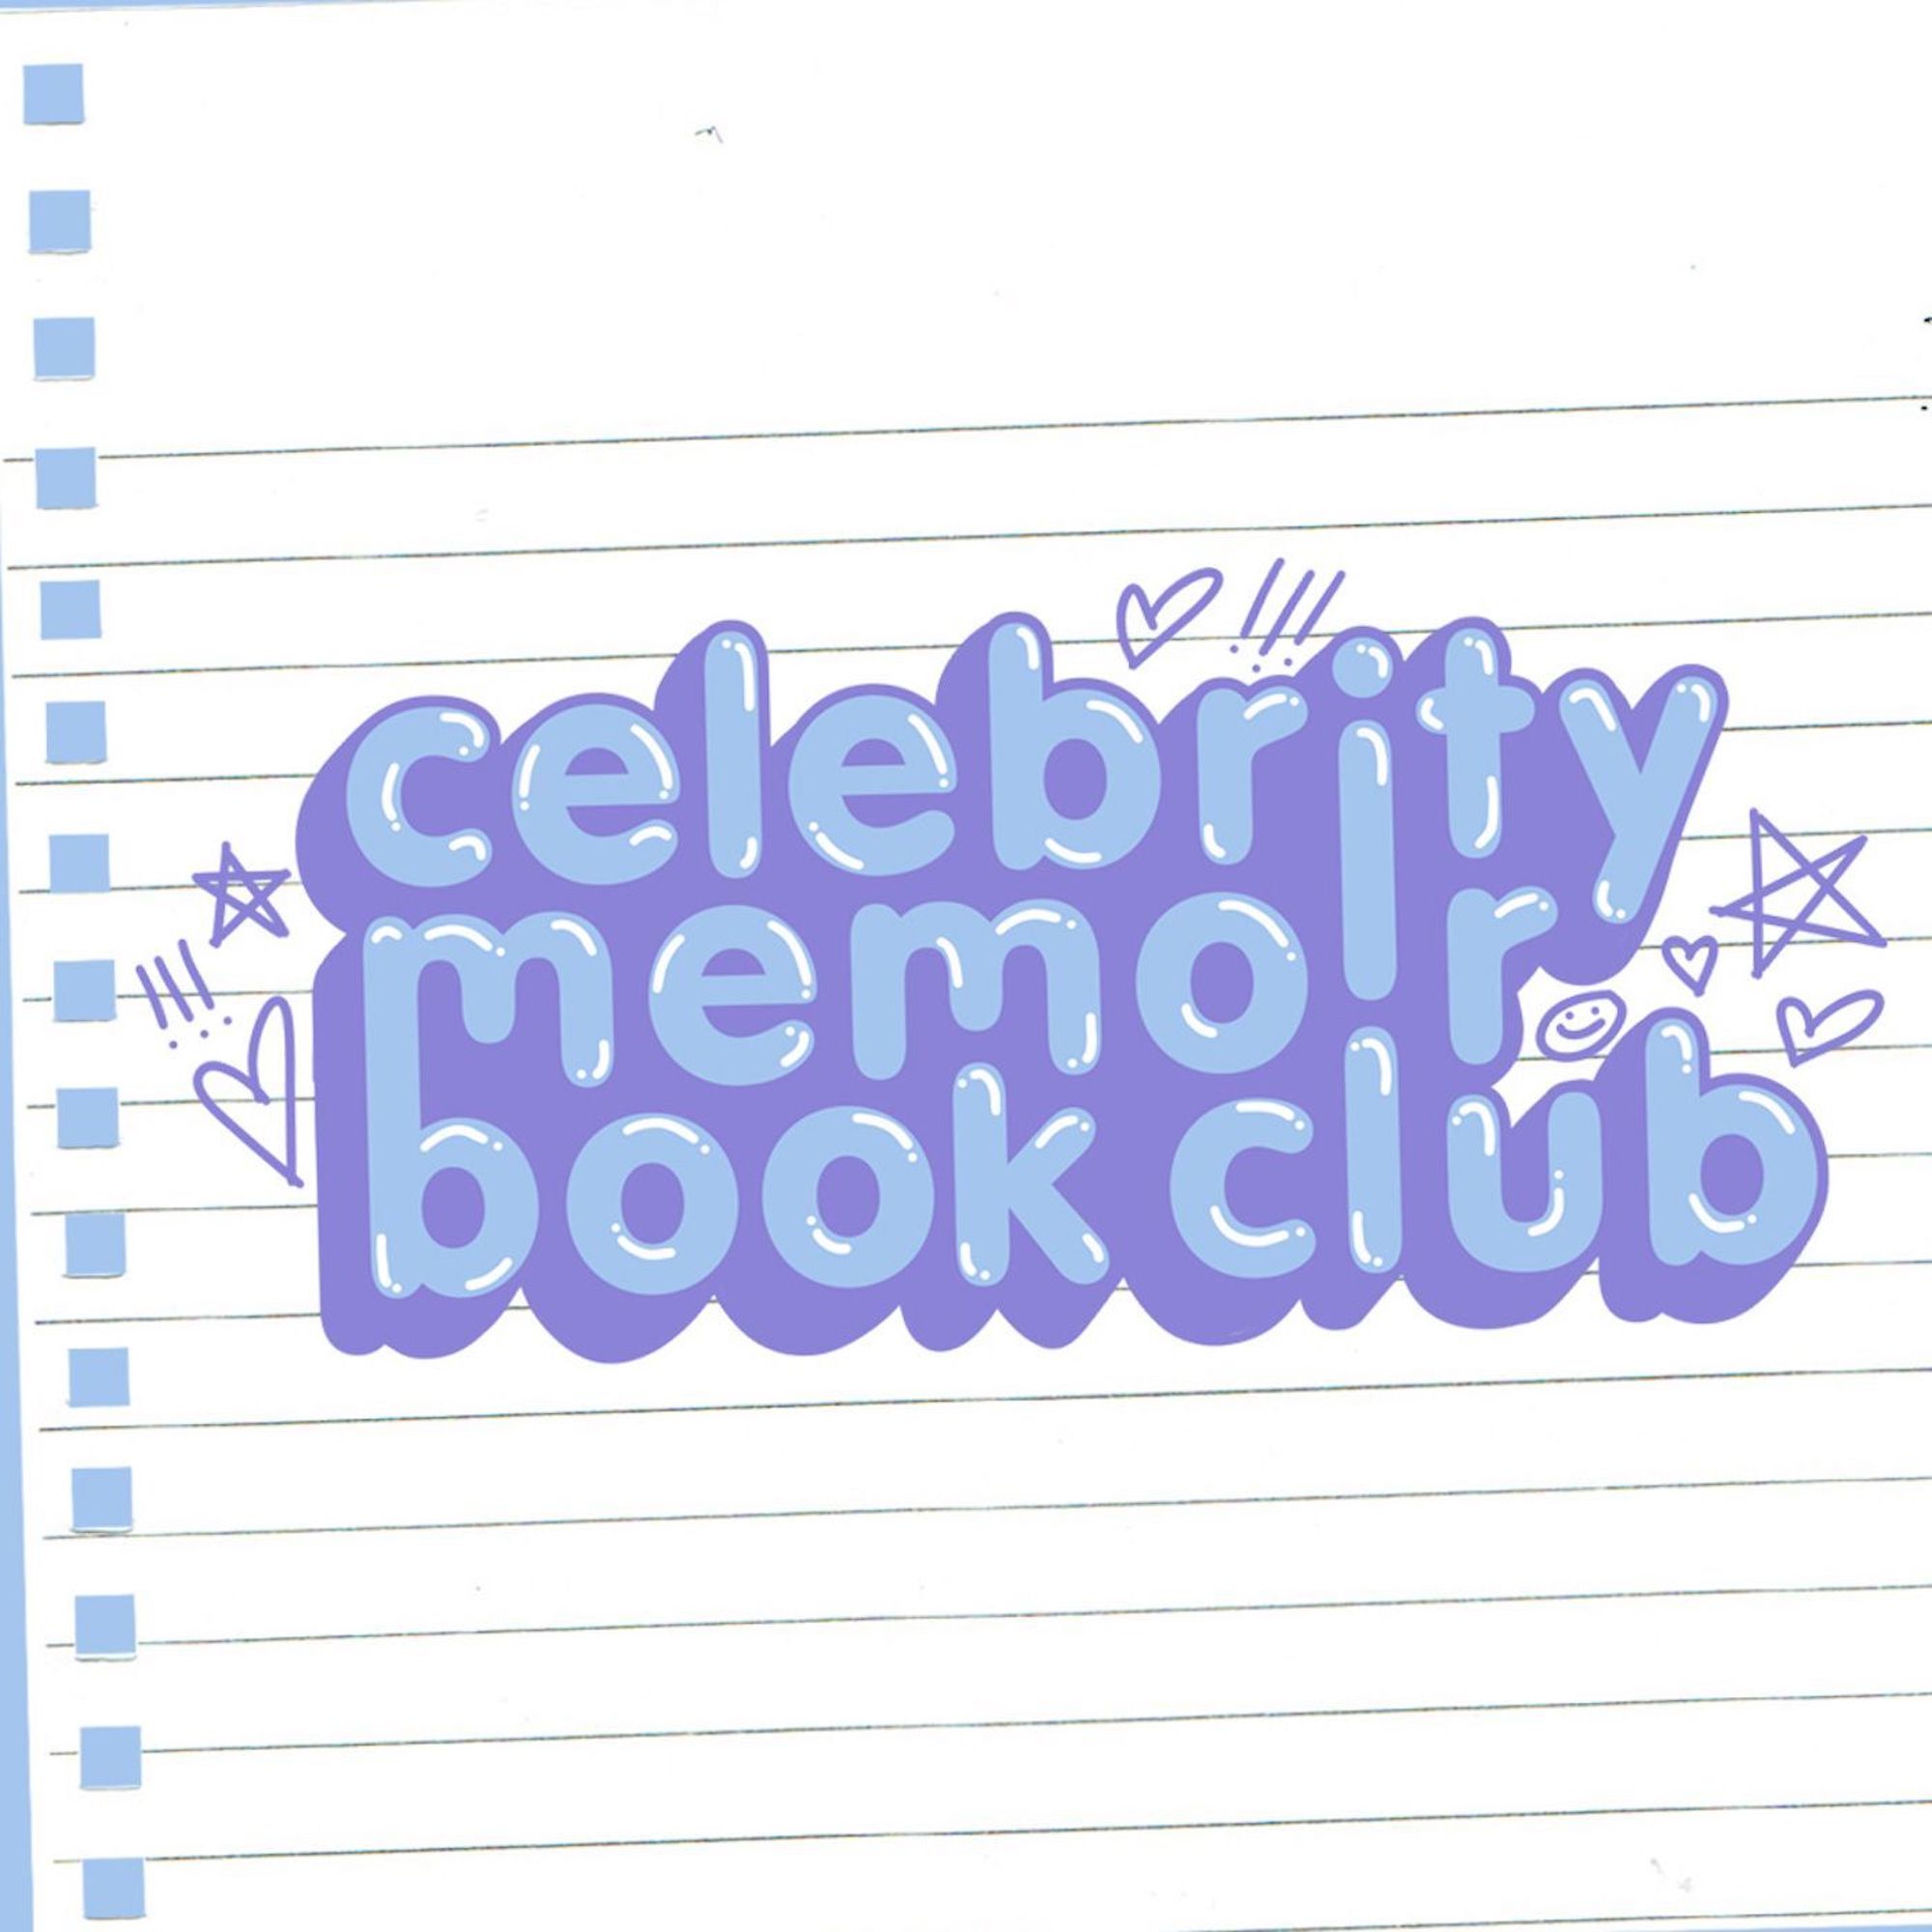 Celebrity Memoir bookclub